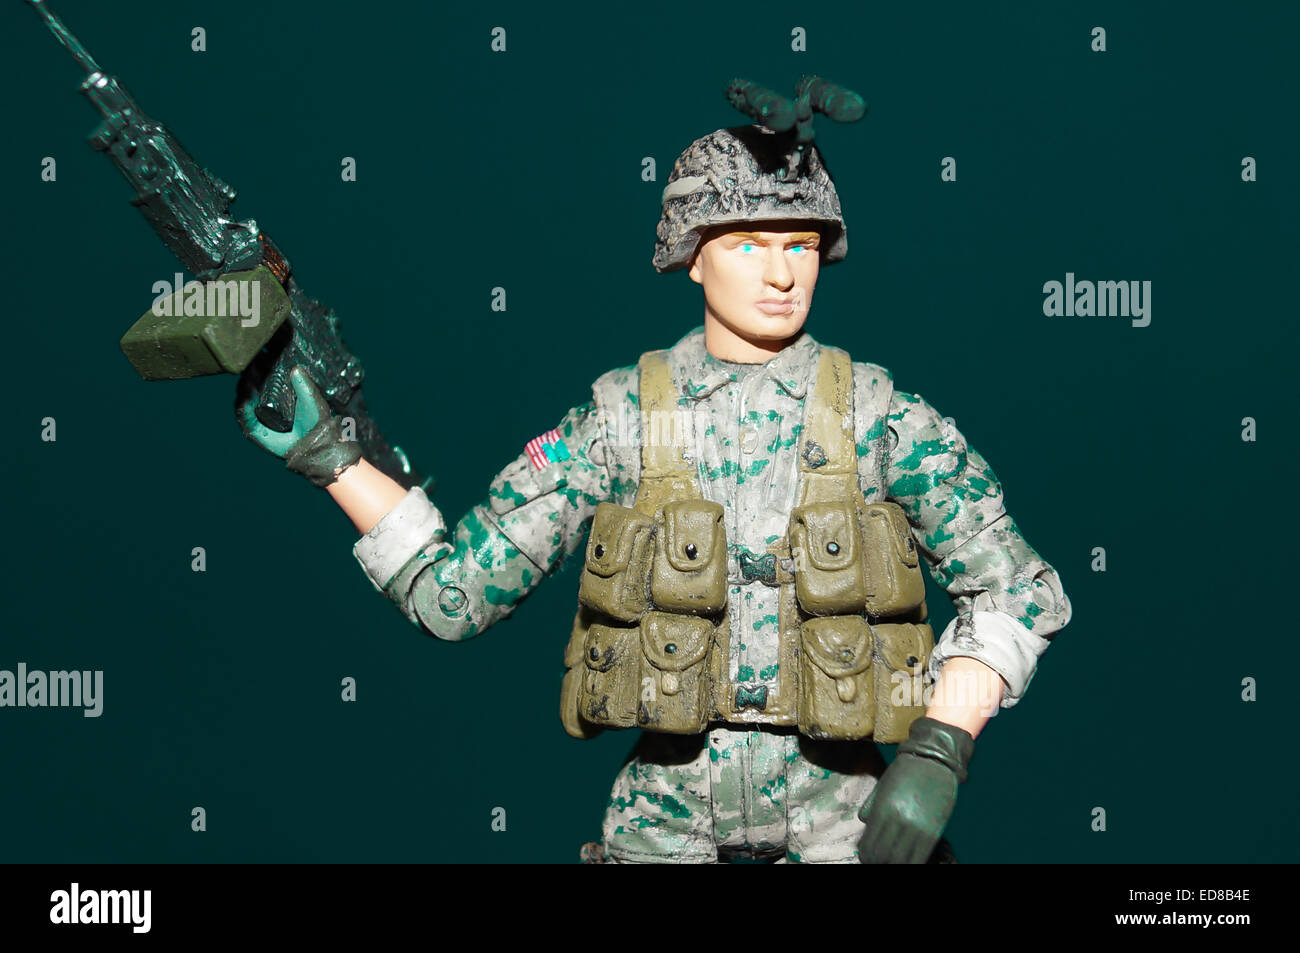 Plastic toy soldier wielding a gun Stock Photo